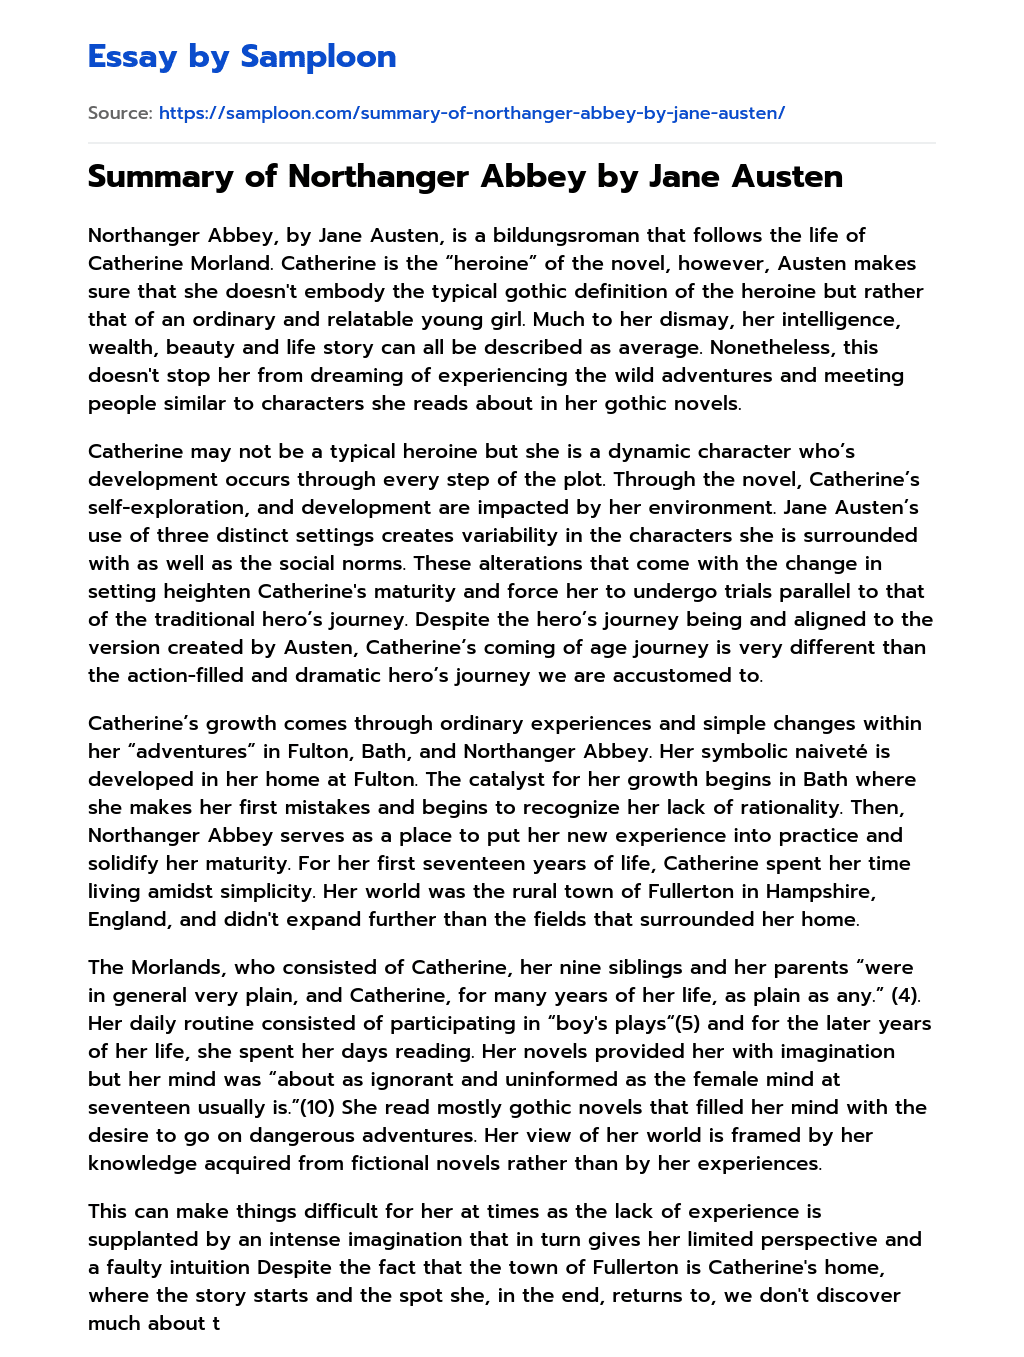 Summary of Northanger Abbey by Jane Austen essay